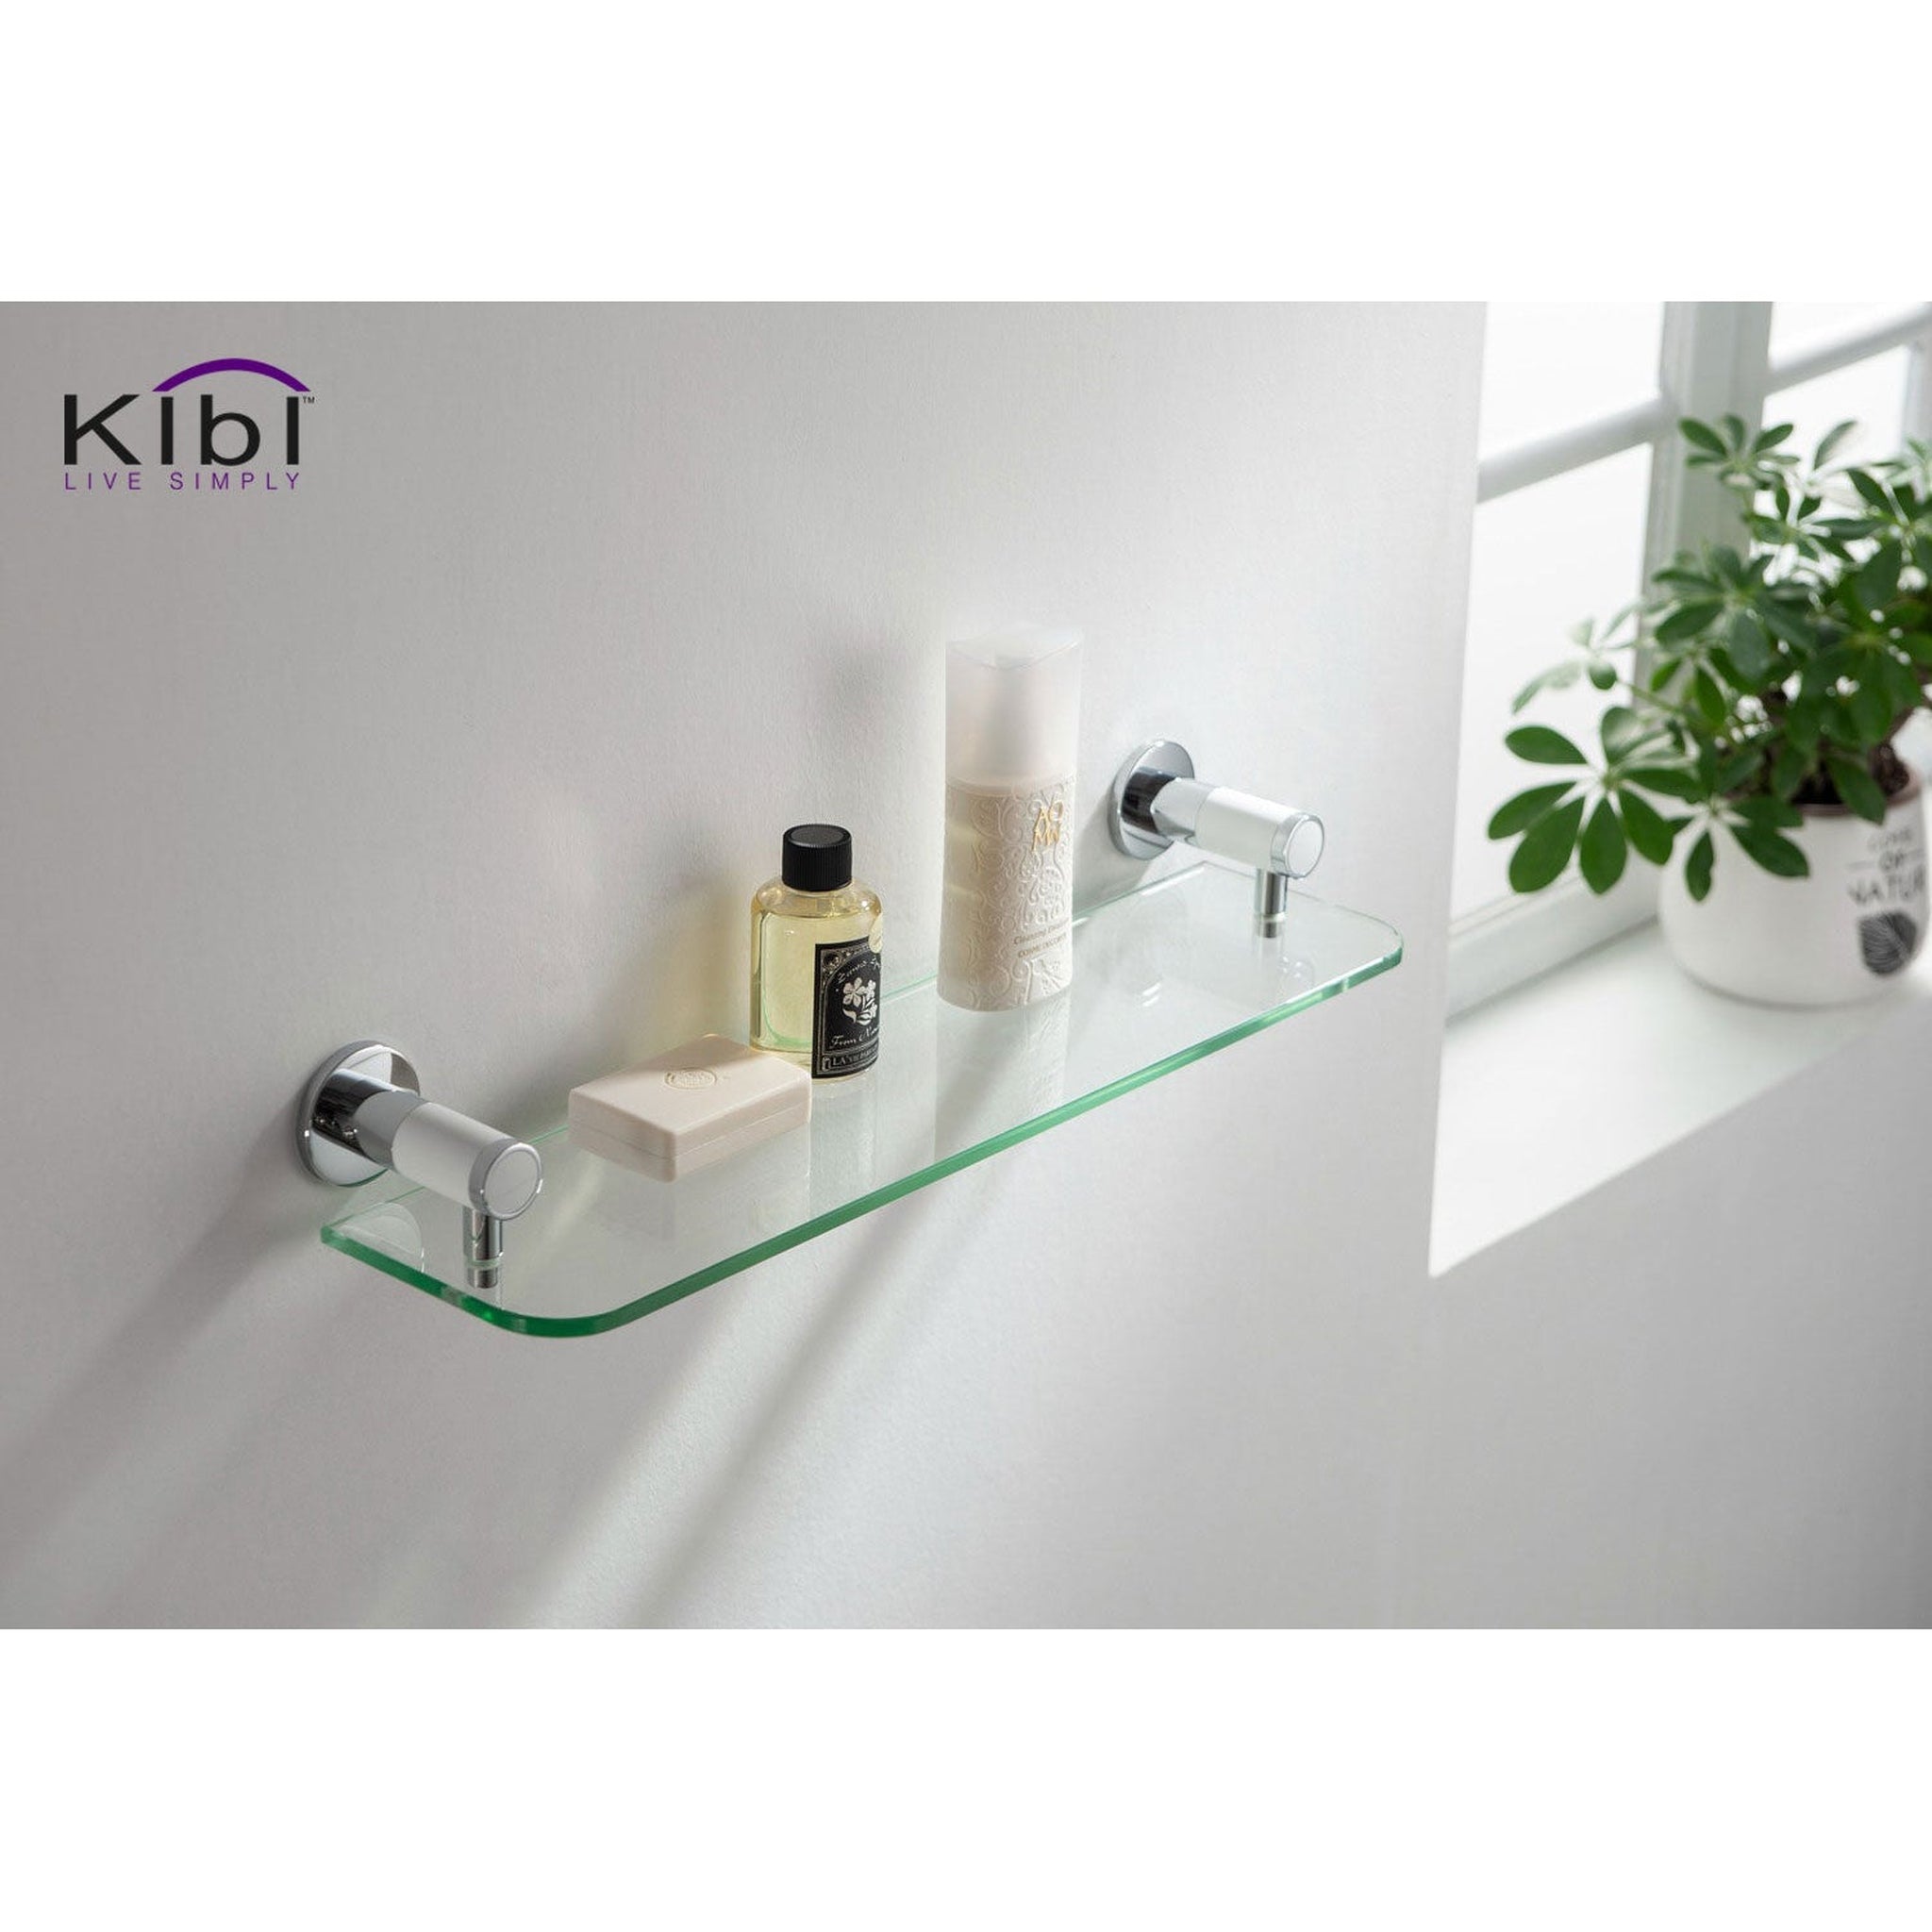 KIBI, KIBI Abaco Bathroom Shelf in Chrome White Finish